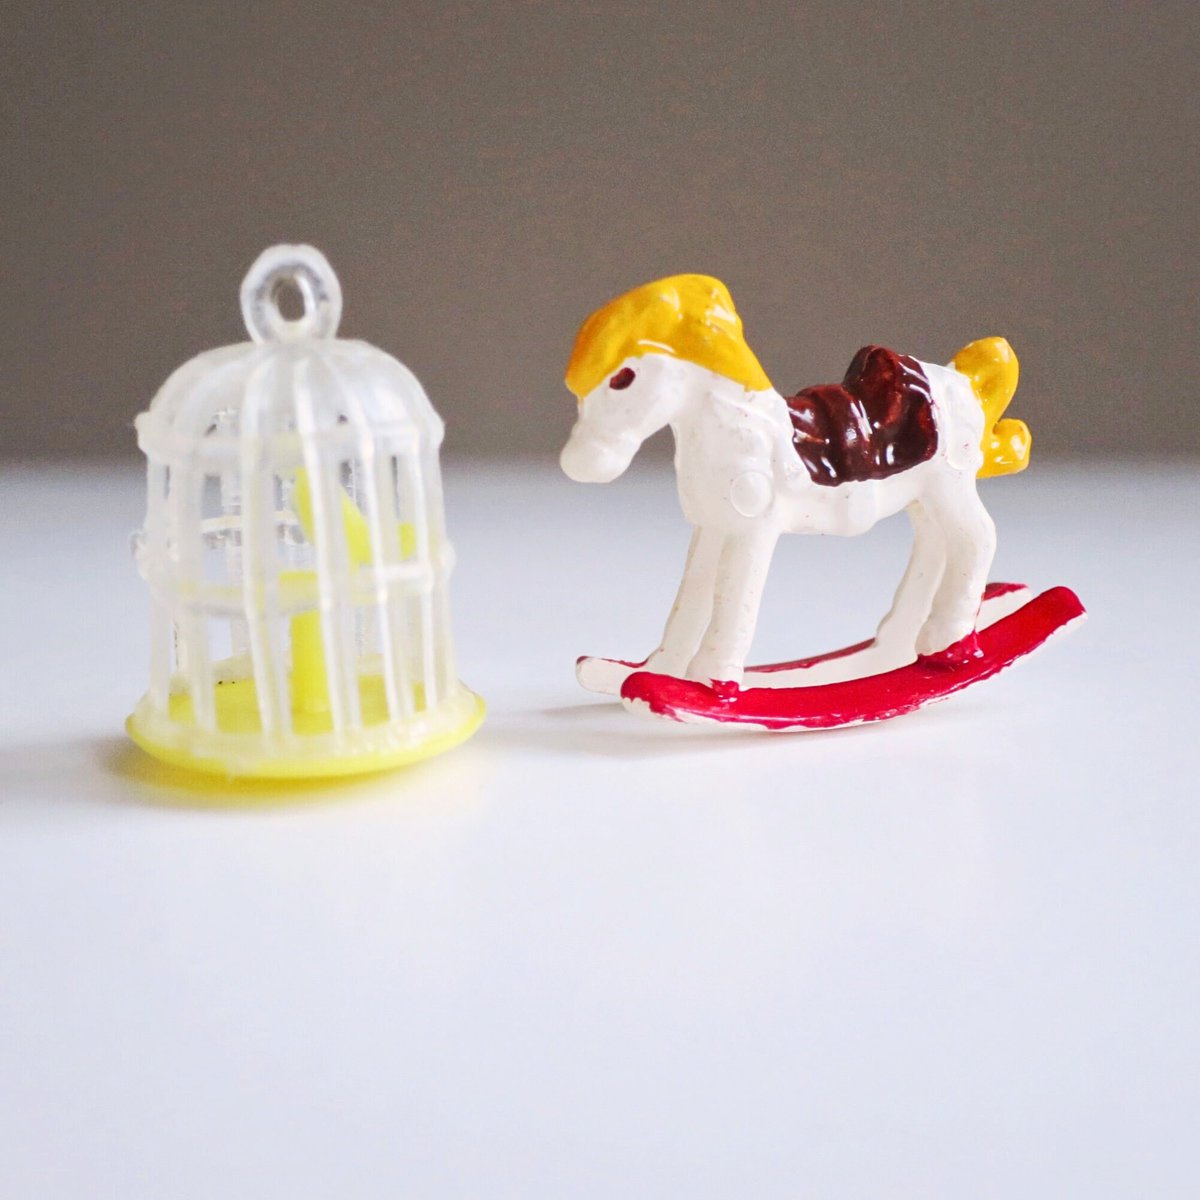 Dollhouse Birdcage with Bird, 1:12, Vintage Rocking Horse, 3/4' Gumball Charm tuppu.net/5b369df9 #SMILEtt23 #EpiconEtsy #Holidays2023 #FestiveVintage #Smilettcij